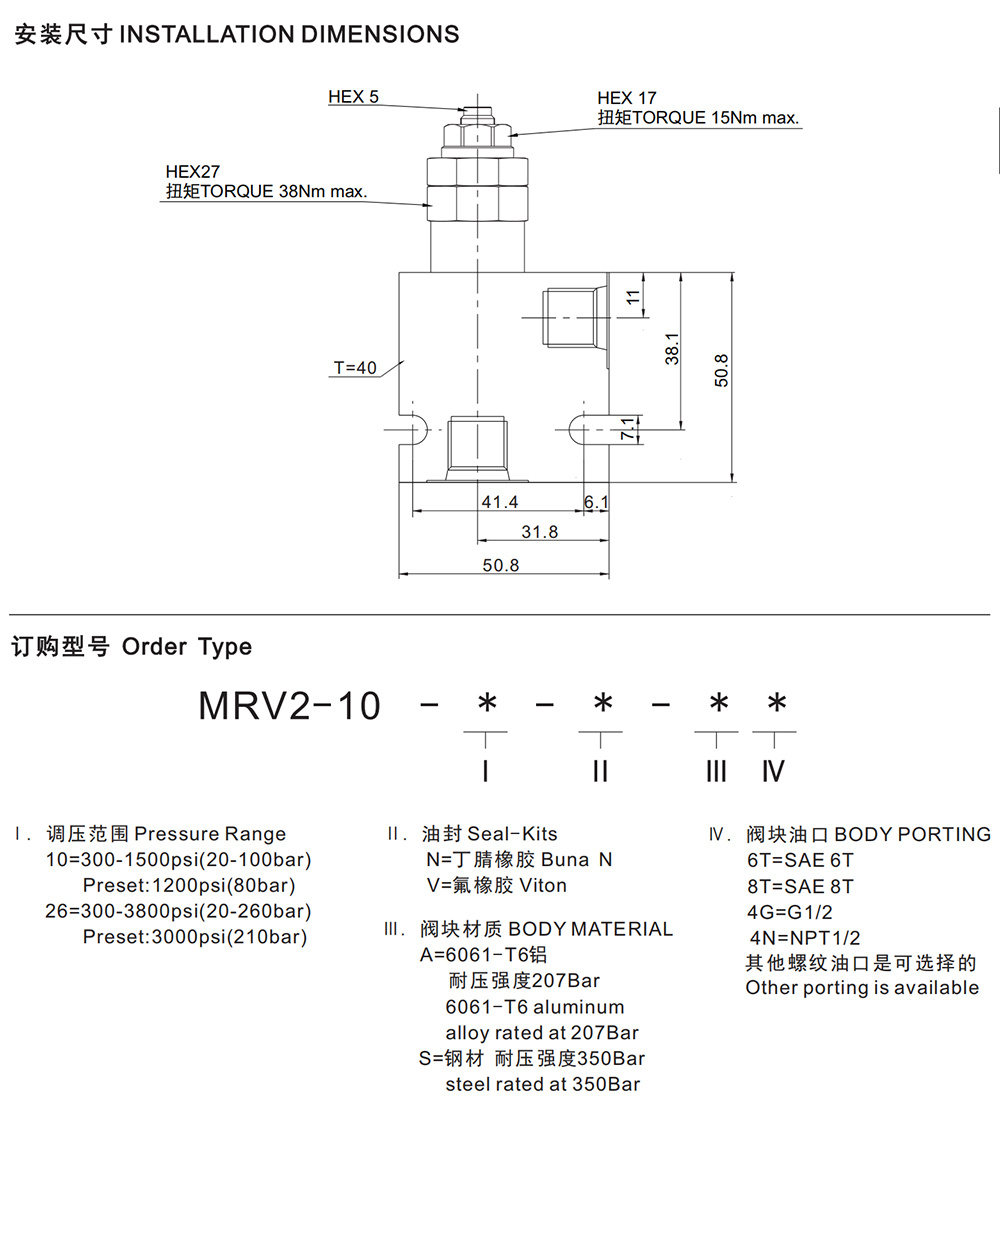 MRV2-10